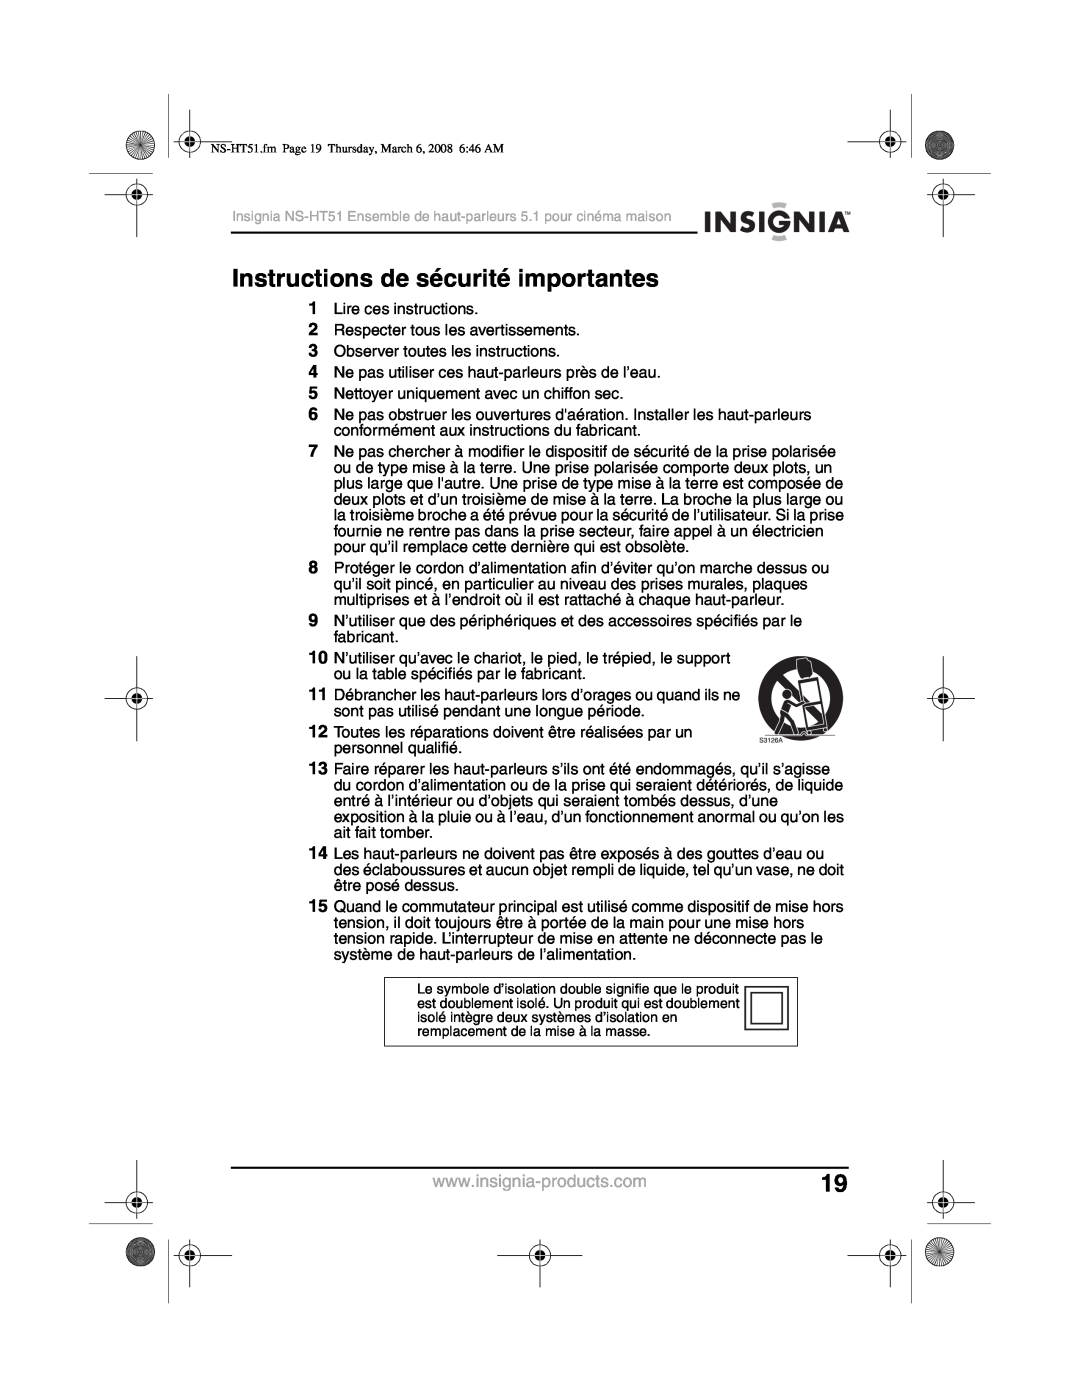 Insignia NS-HT51 manual Instructions de sécurité importantes 